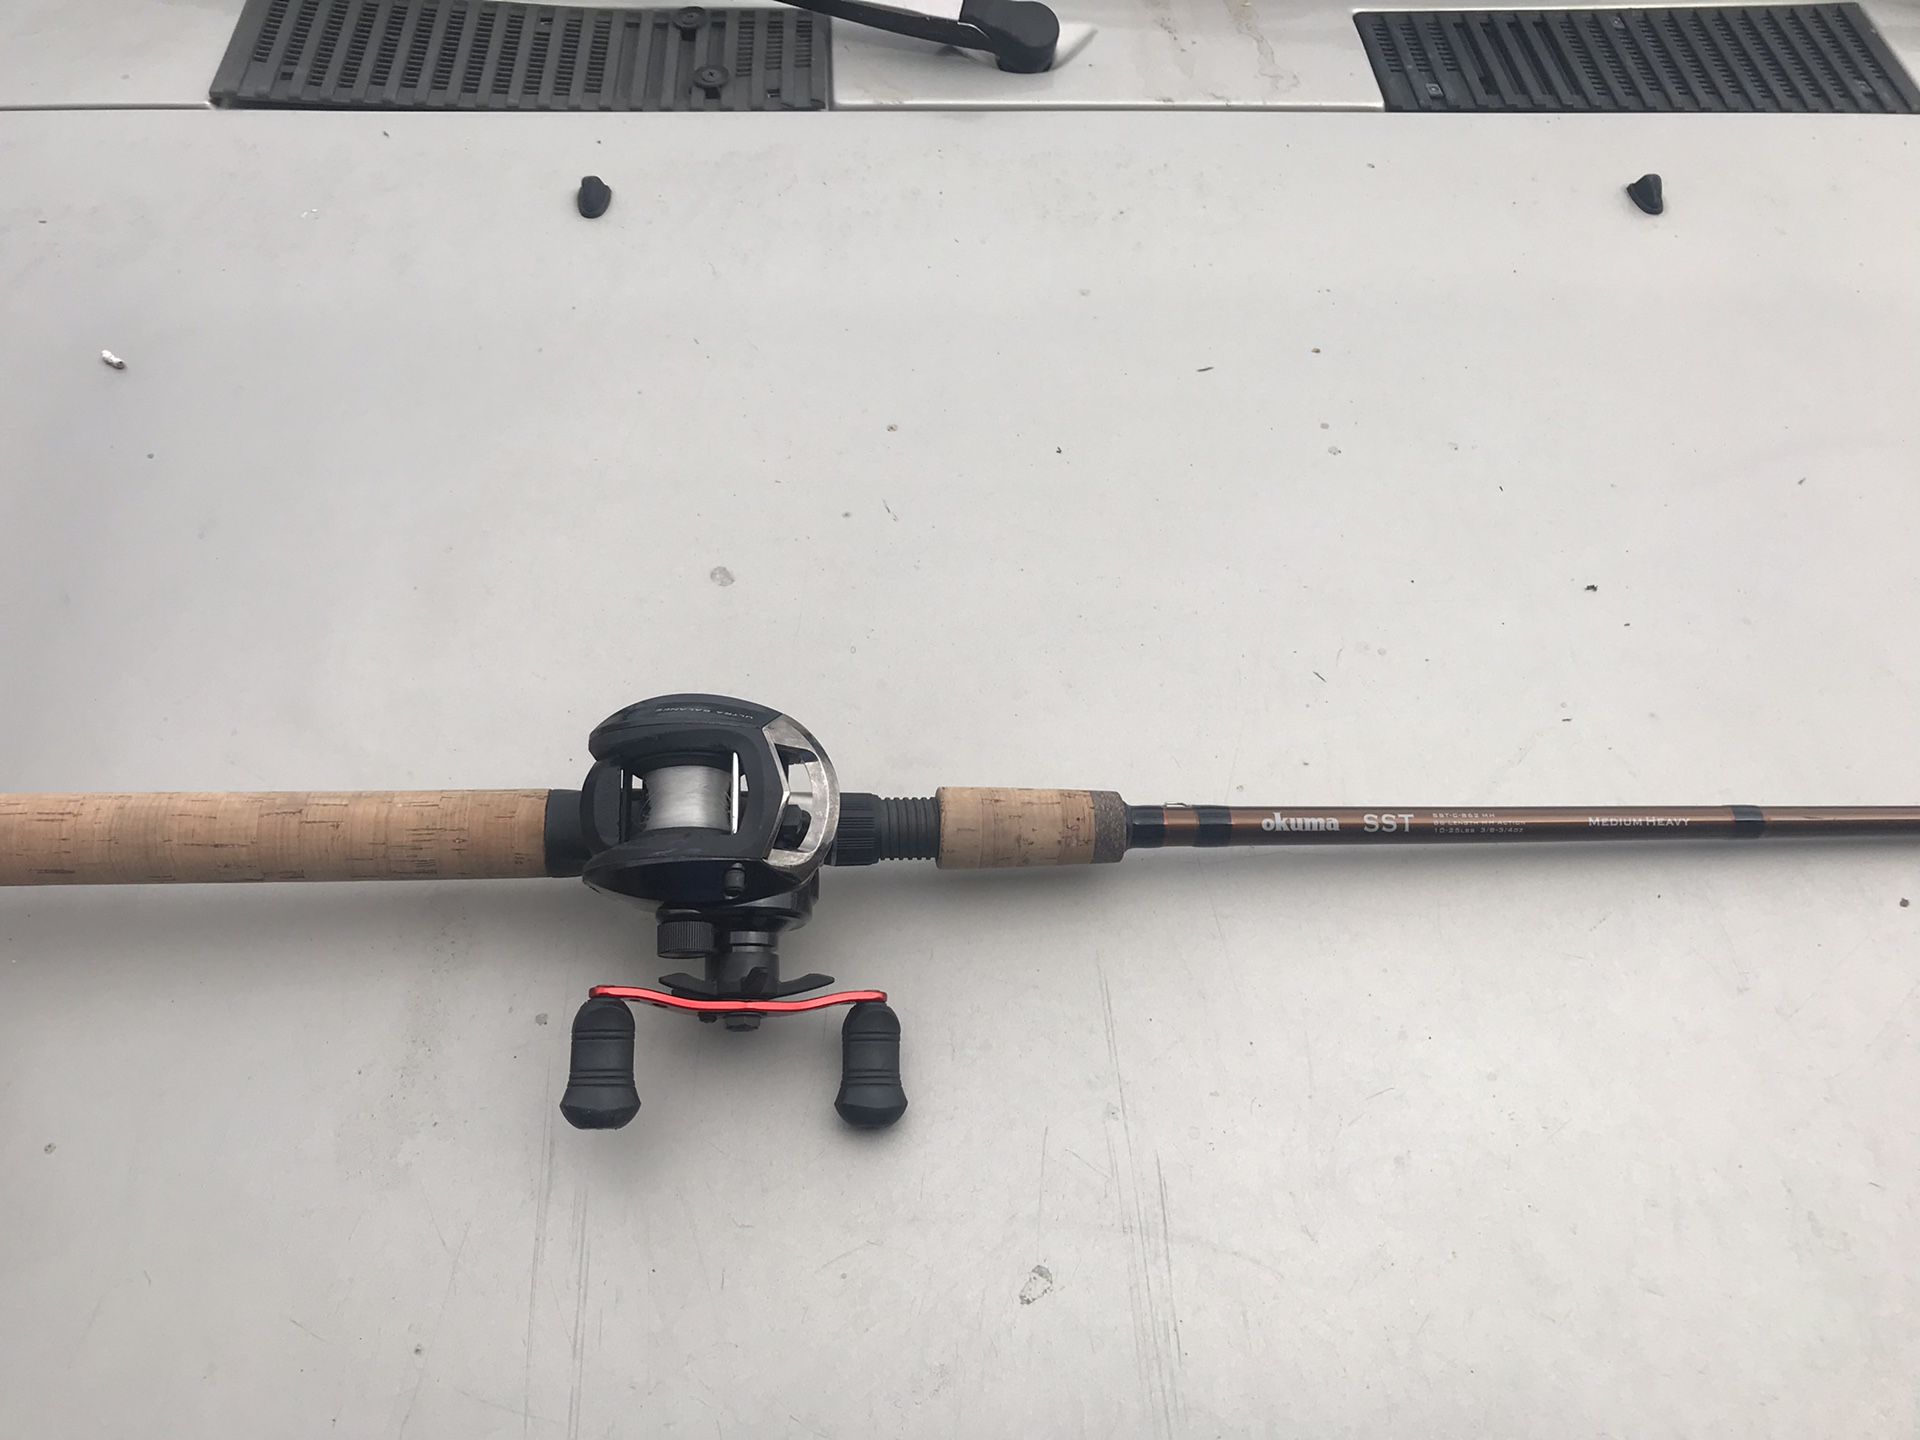 Fishing rod in reel $65 casting 8’6”